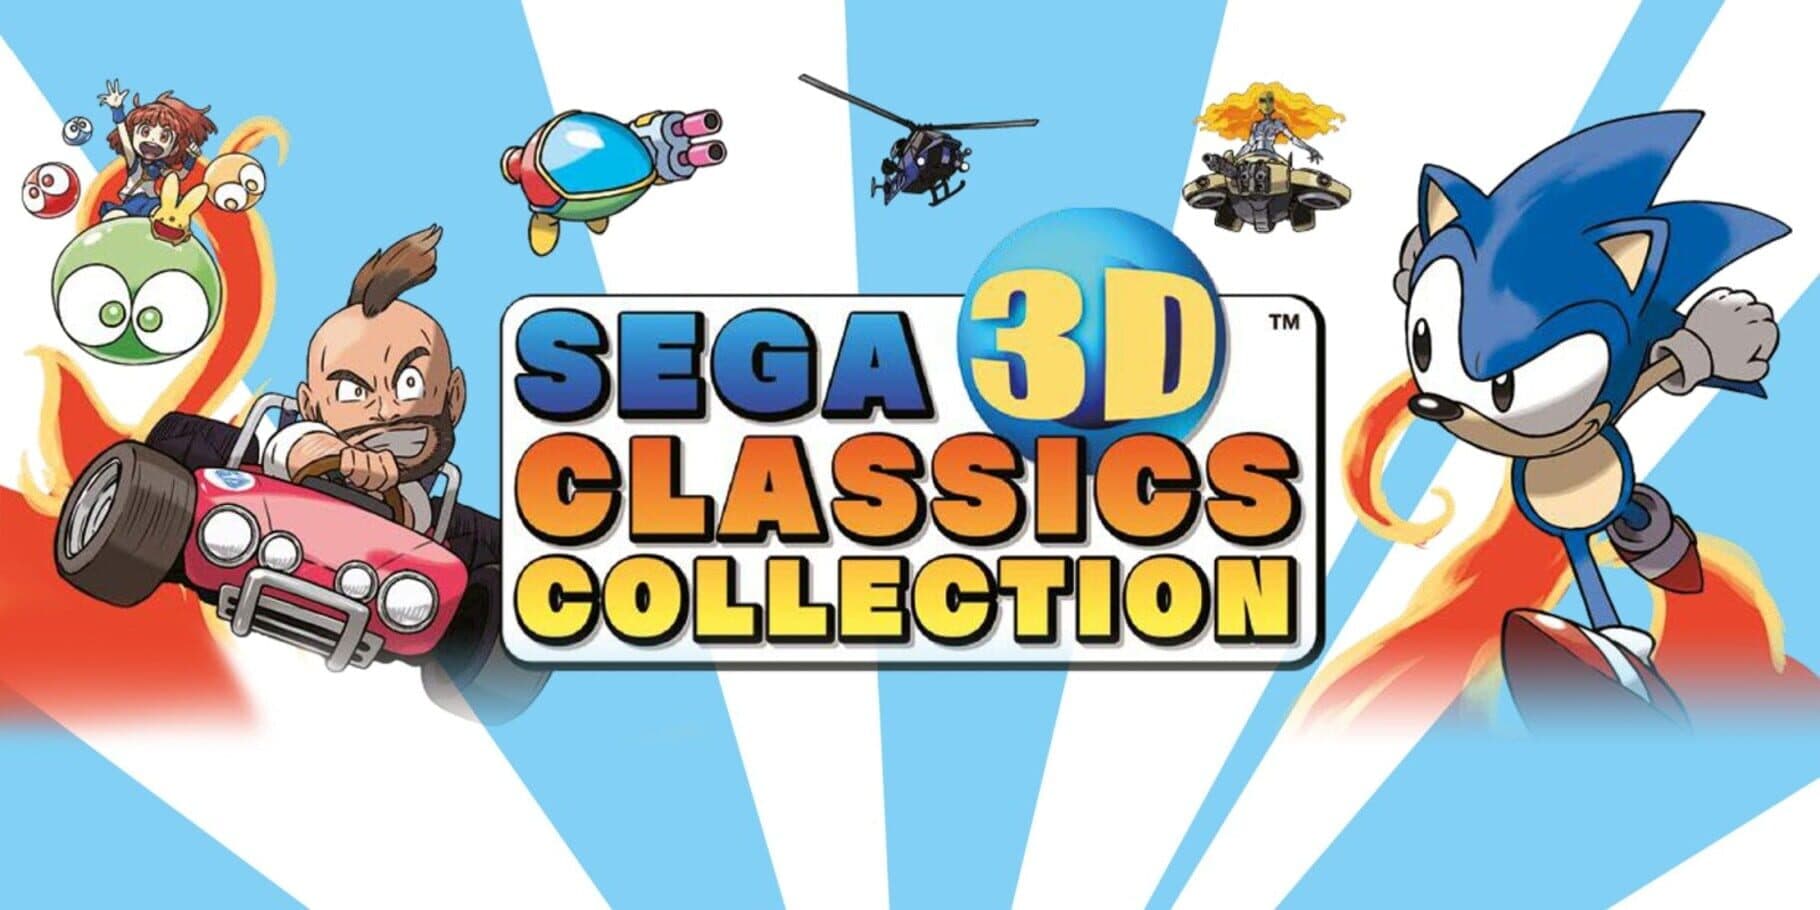 Sega 3D Classics Collection Image